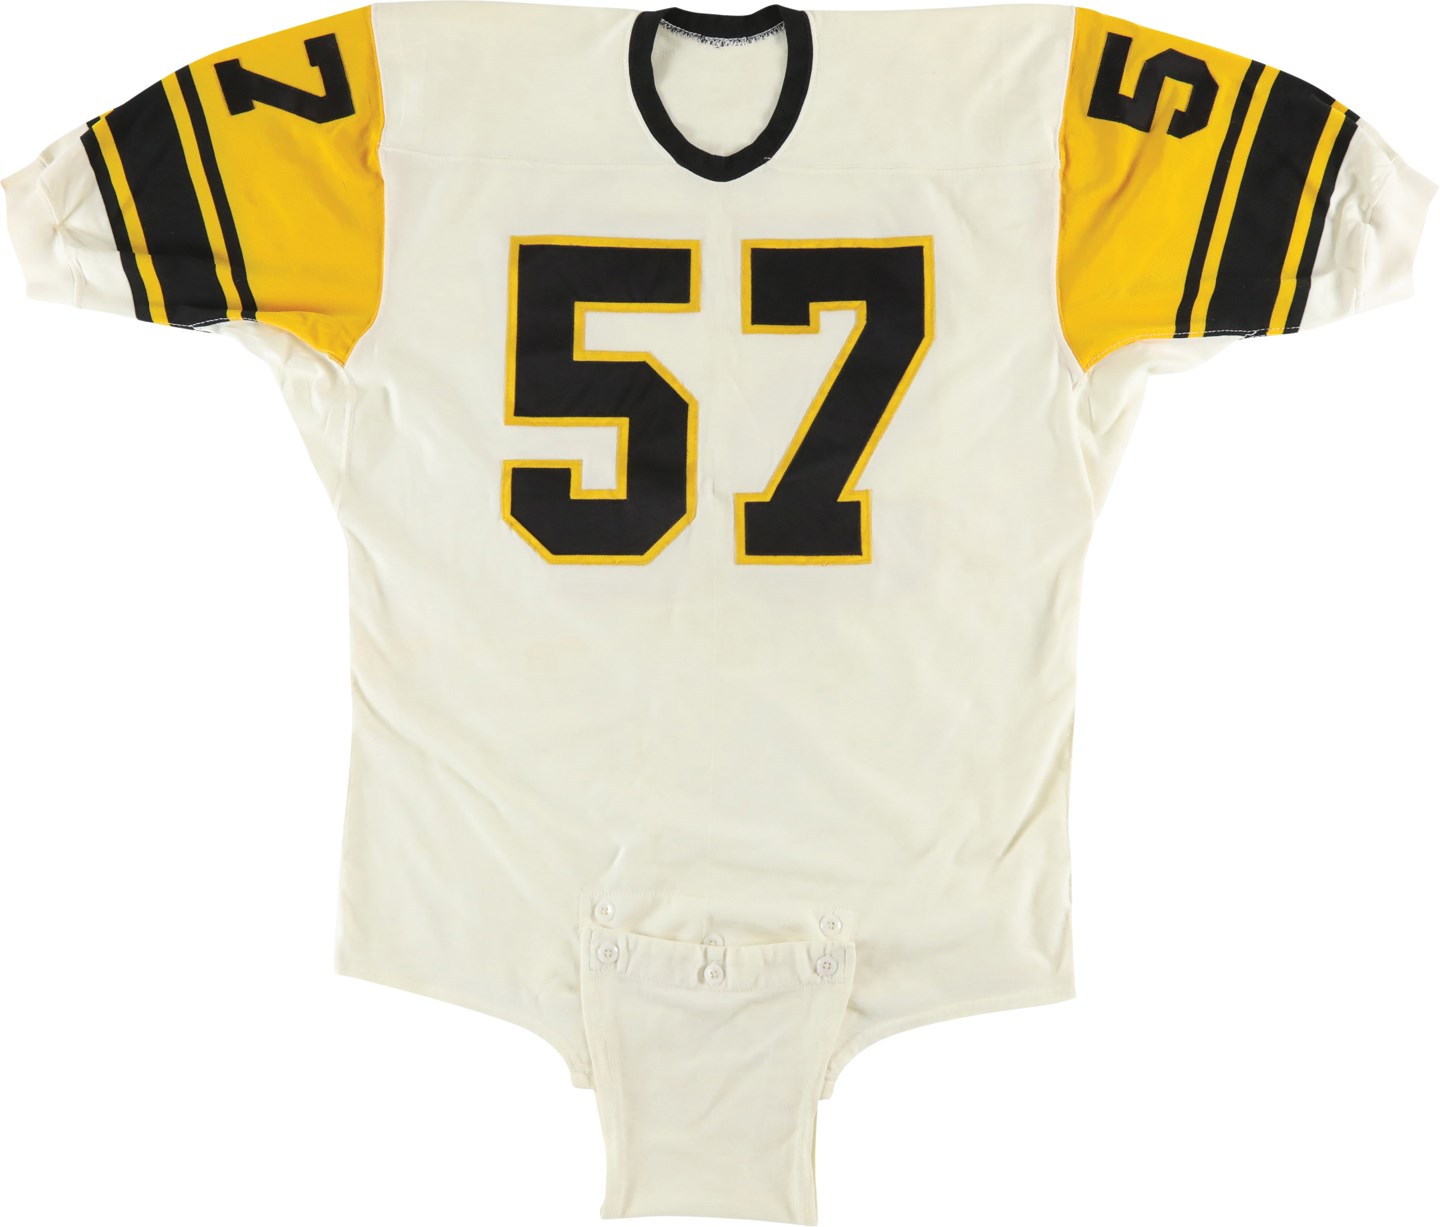 - Circa 1964 Pittsburgh Steelers #57 Game Worn Jersey